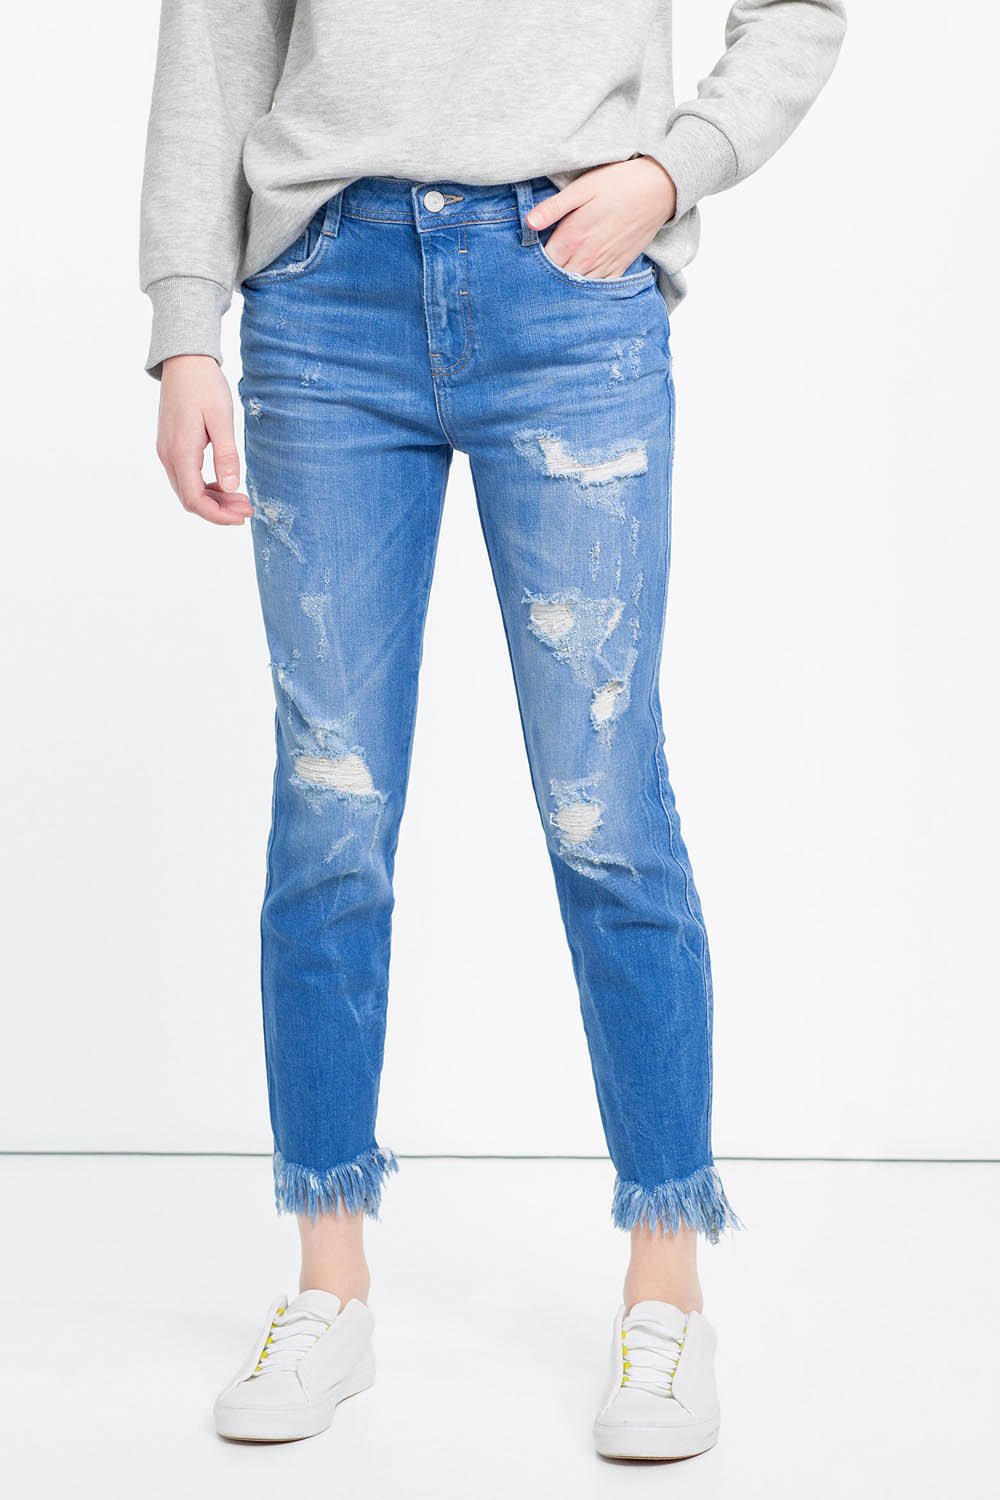 Zara jeans, approx $70.